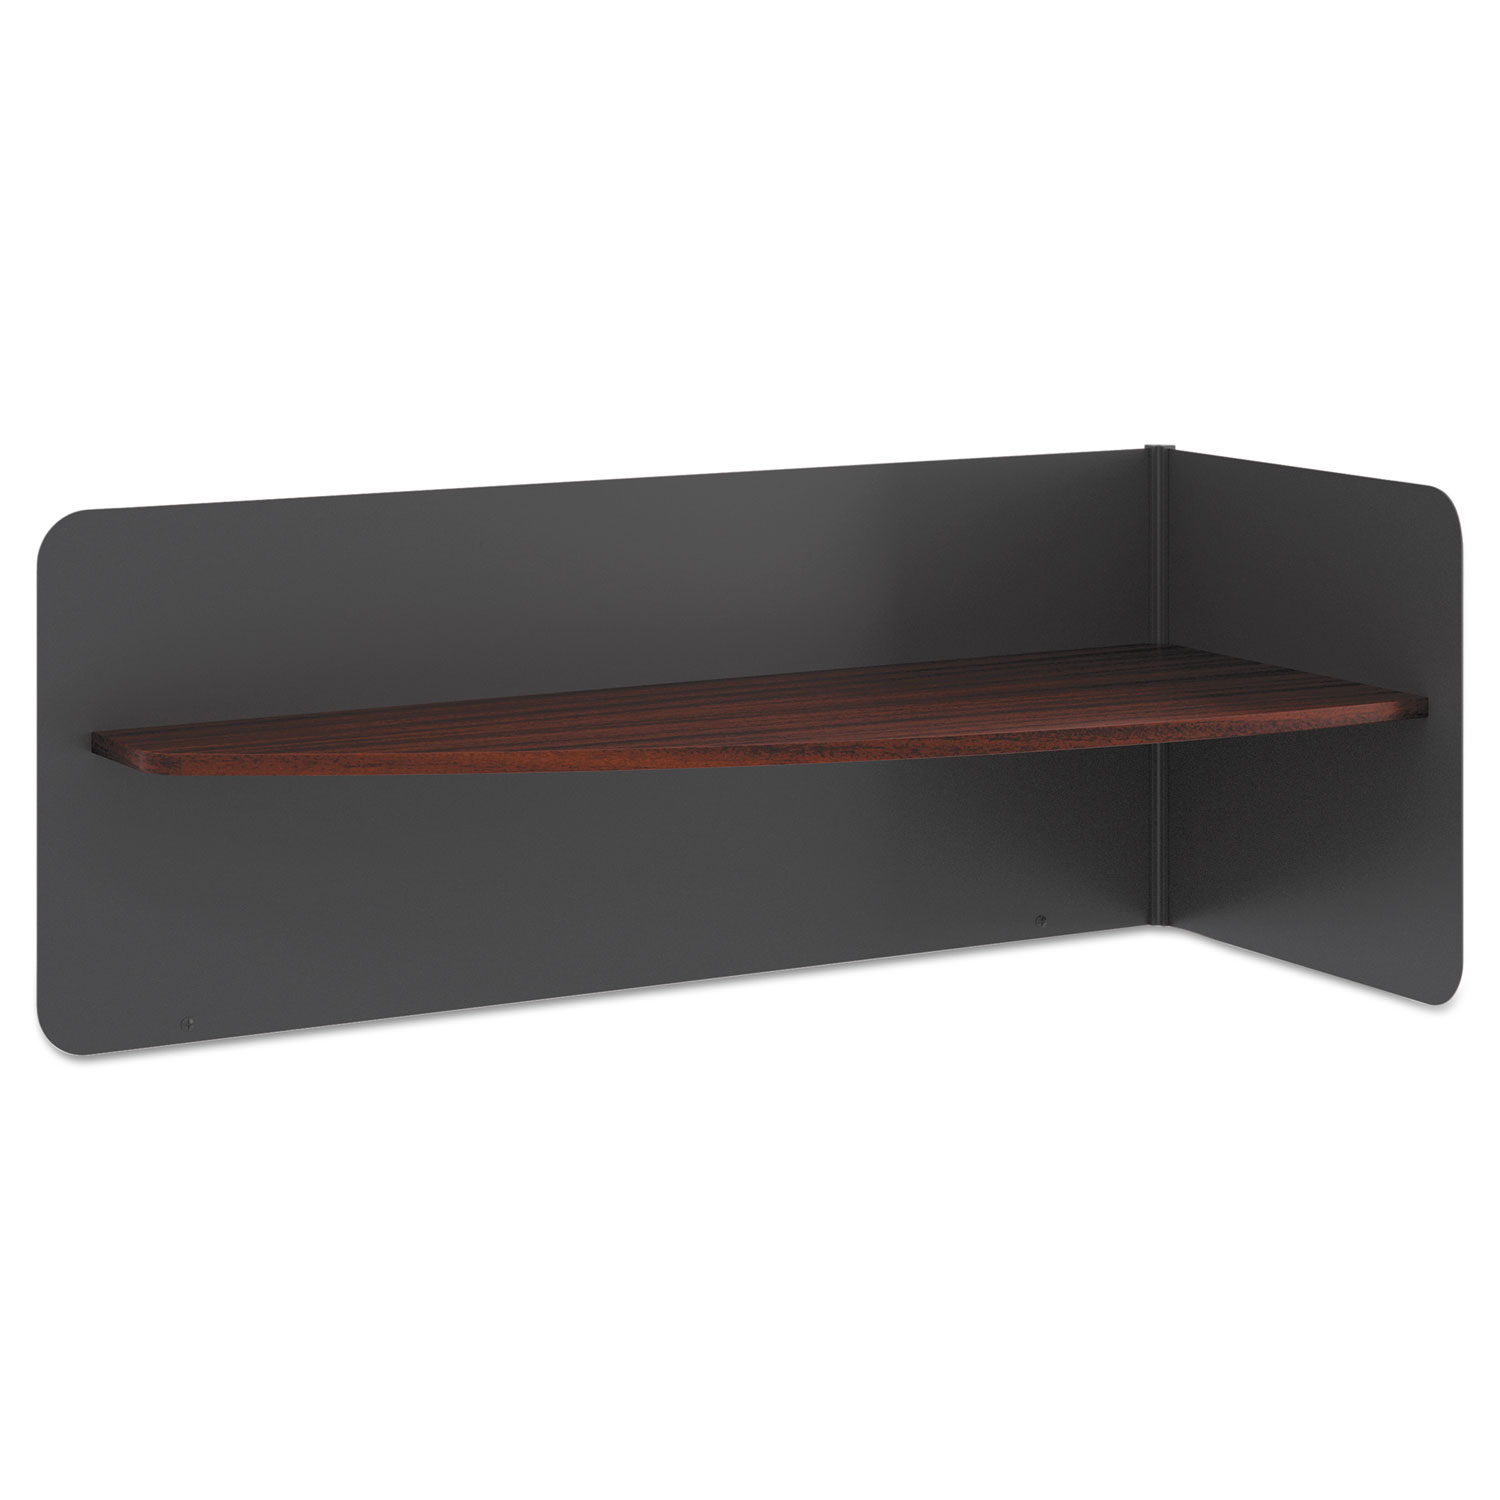  HON HMNGDIV.C1 Manage Series Table Desk Metal Dividerwith Laminate Shelf, 31w x 13d x 12h, Chestnut (BSXMNGDIVC) 